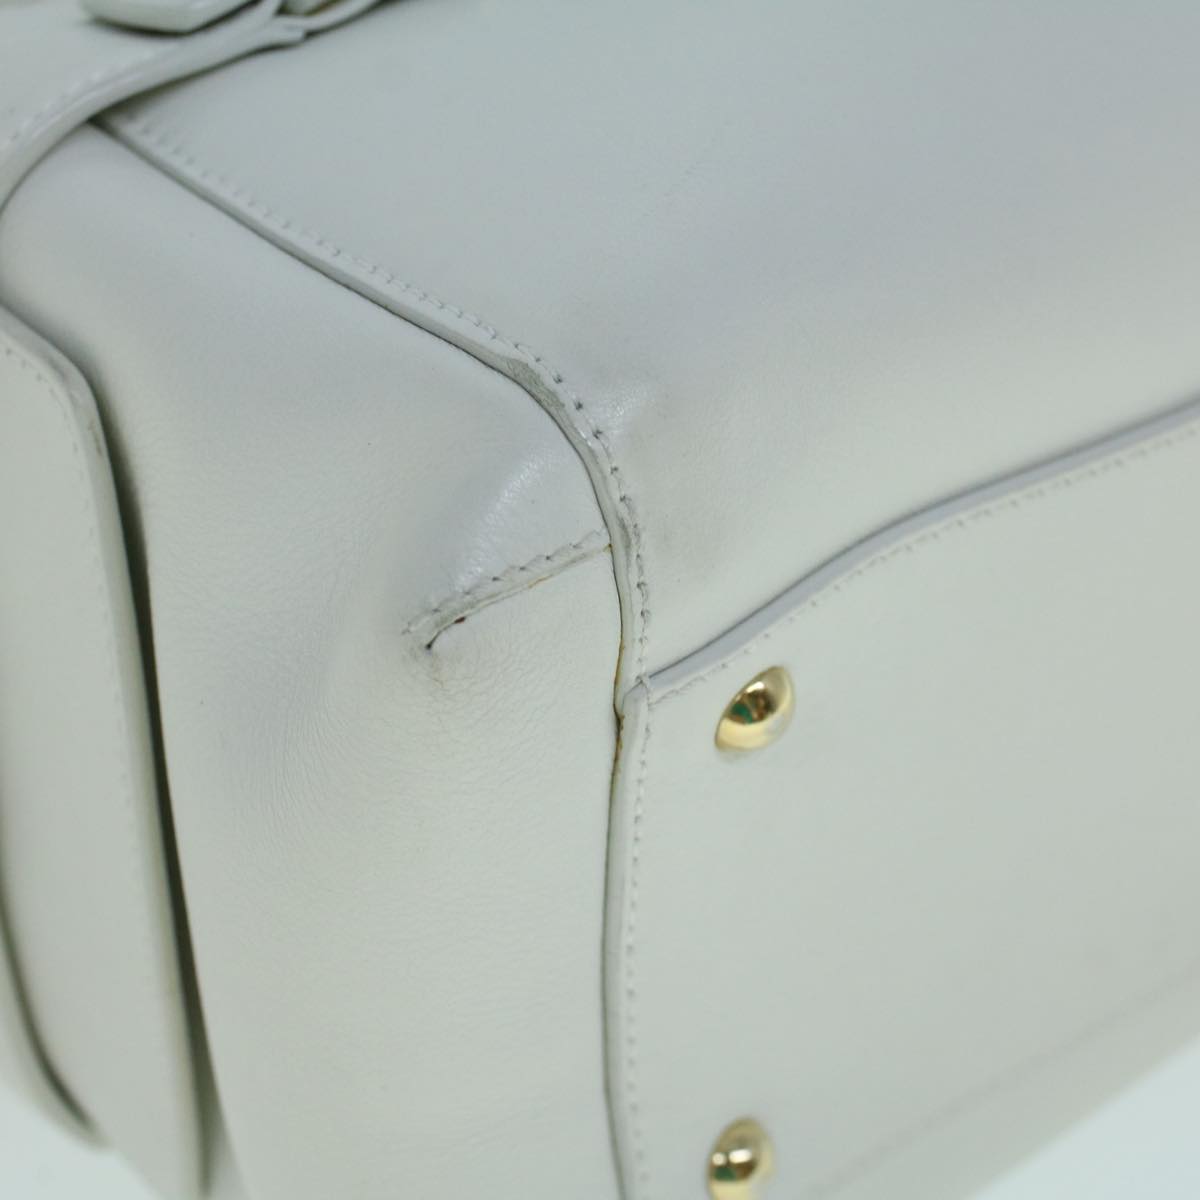 Salvatore Ferragamo Gancini Shoulder Bag Leather White Auth 57191